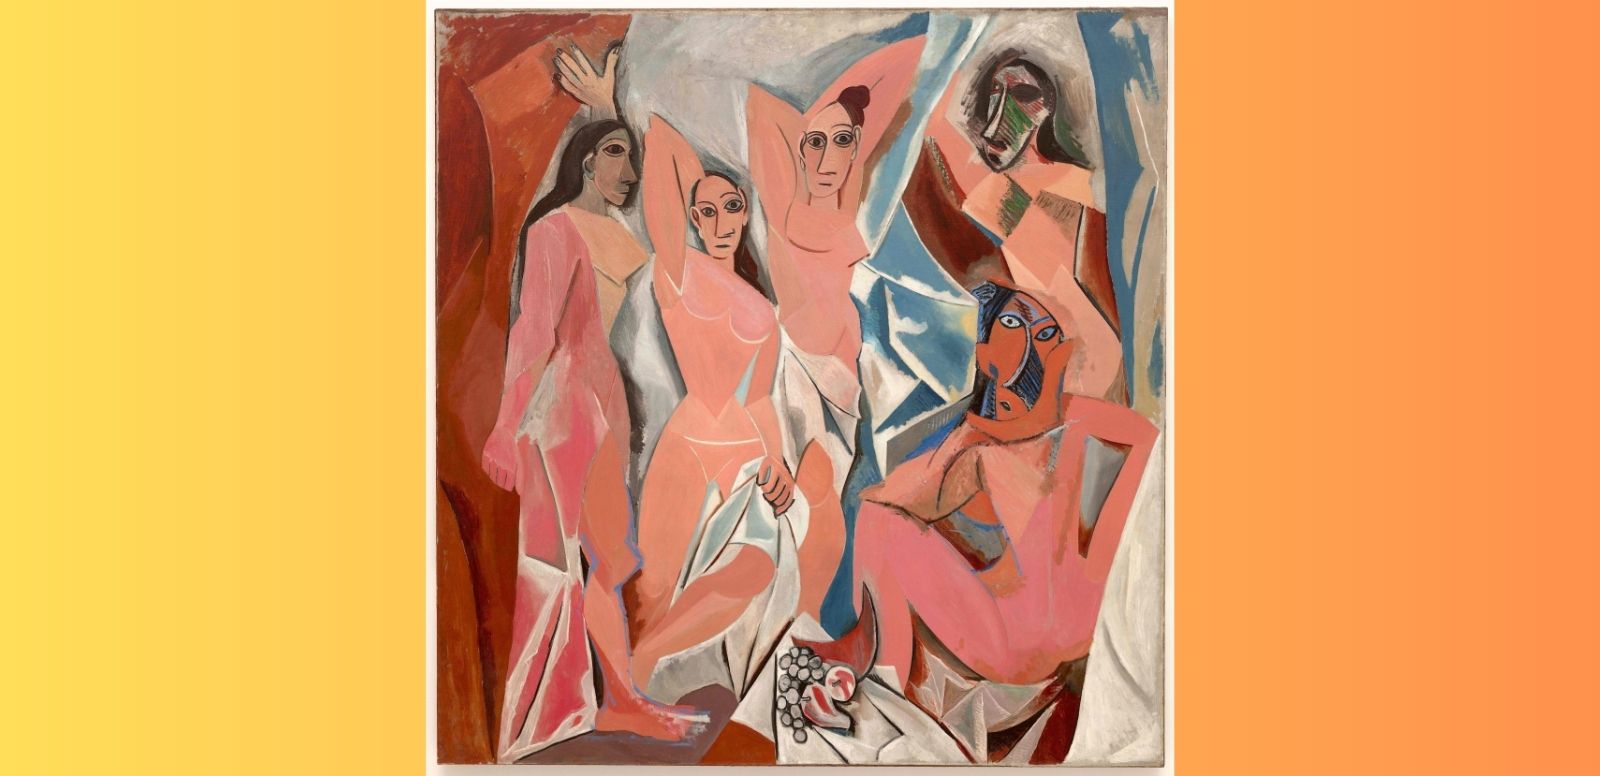 Pablo Picasso. “Las Señoritas de Avignon”, 1907